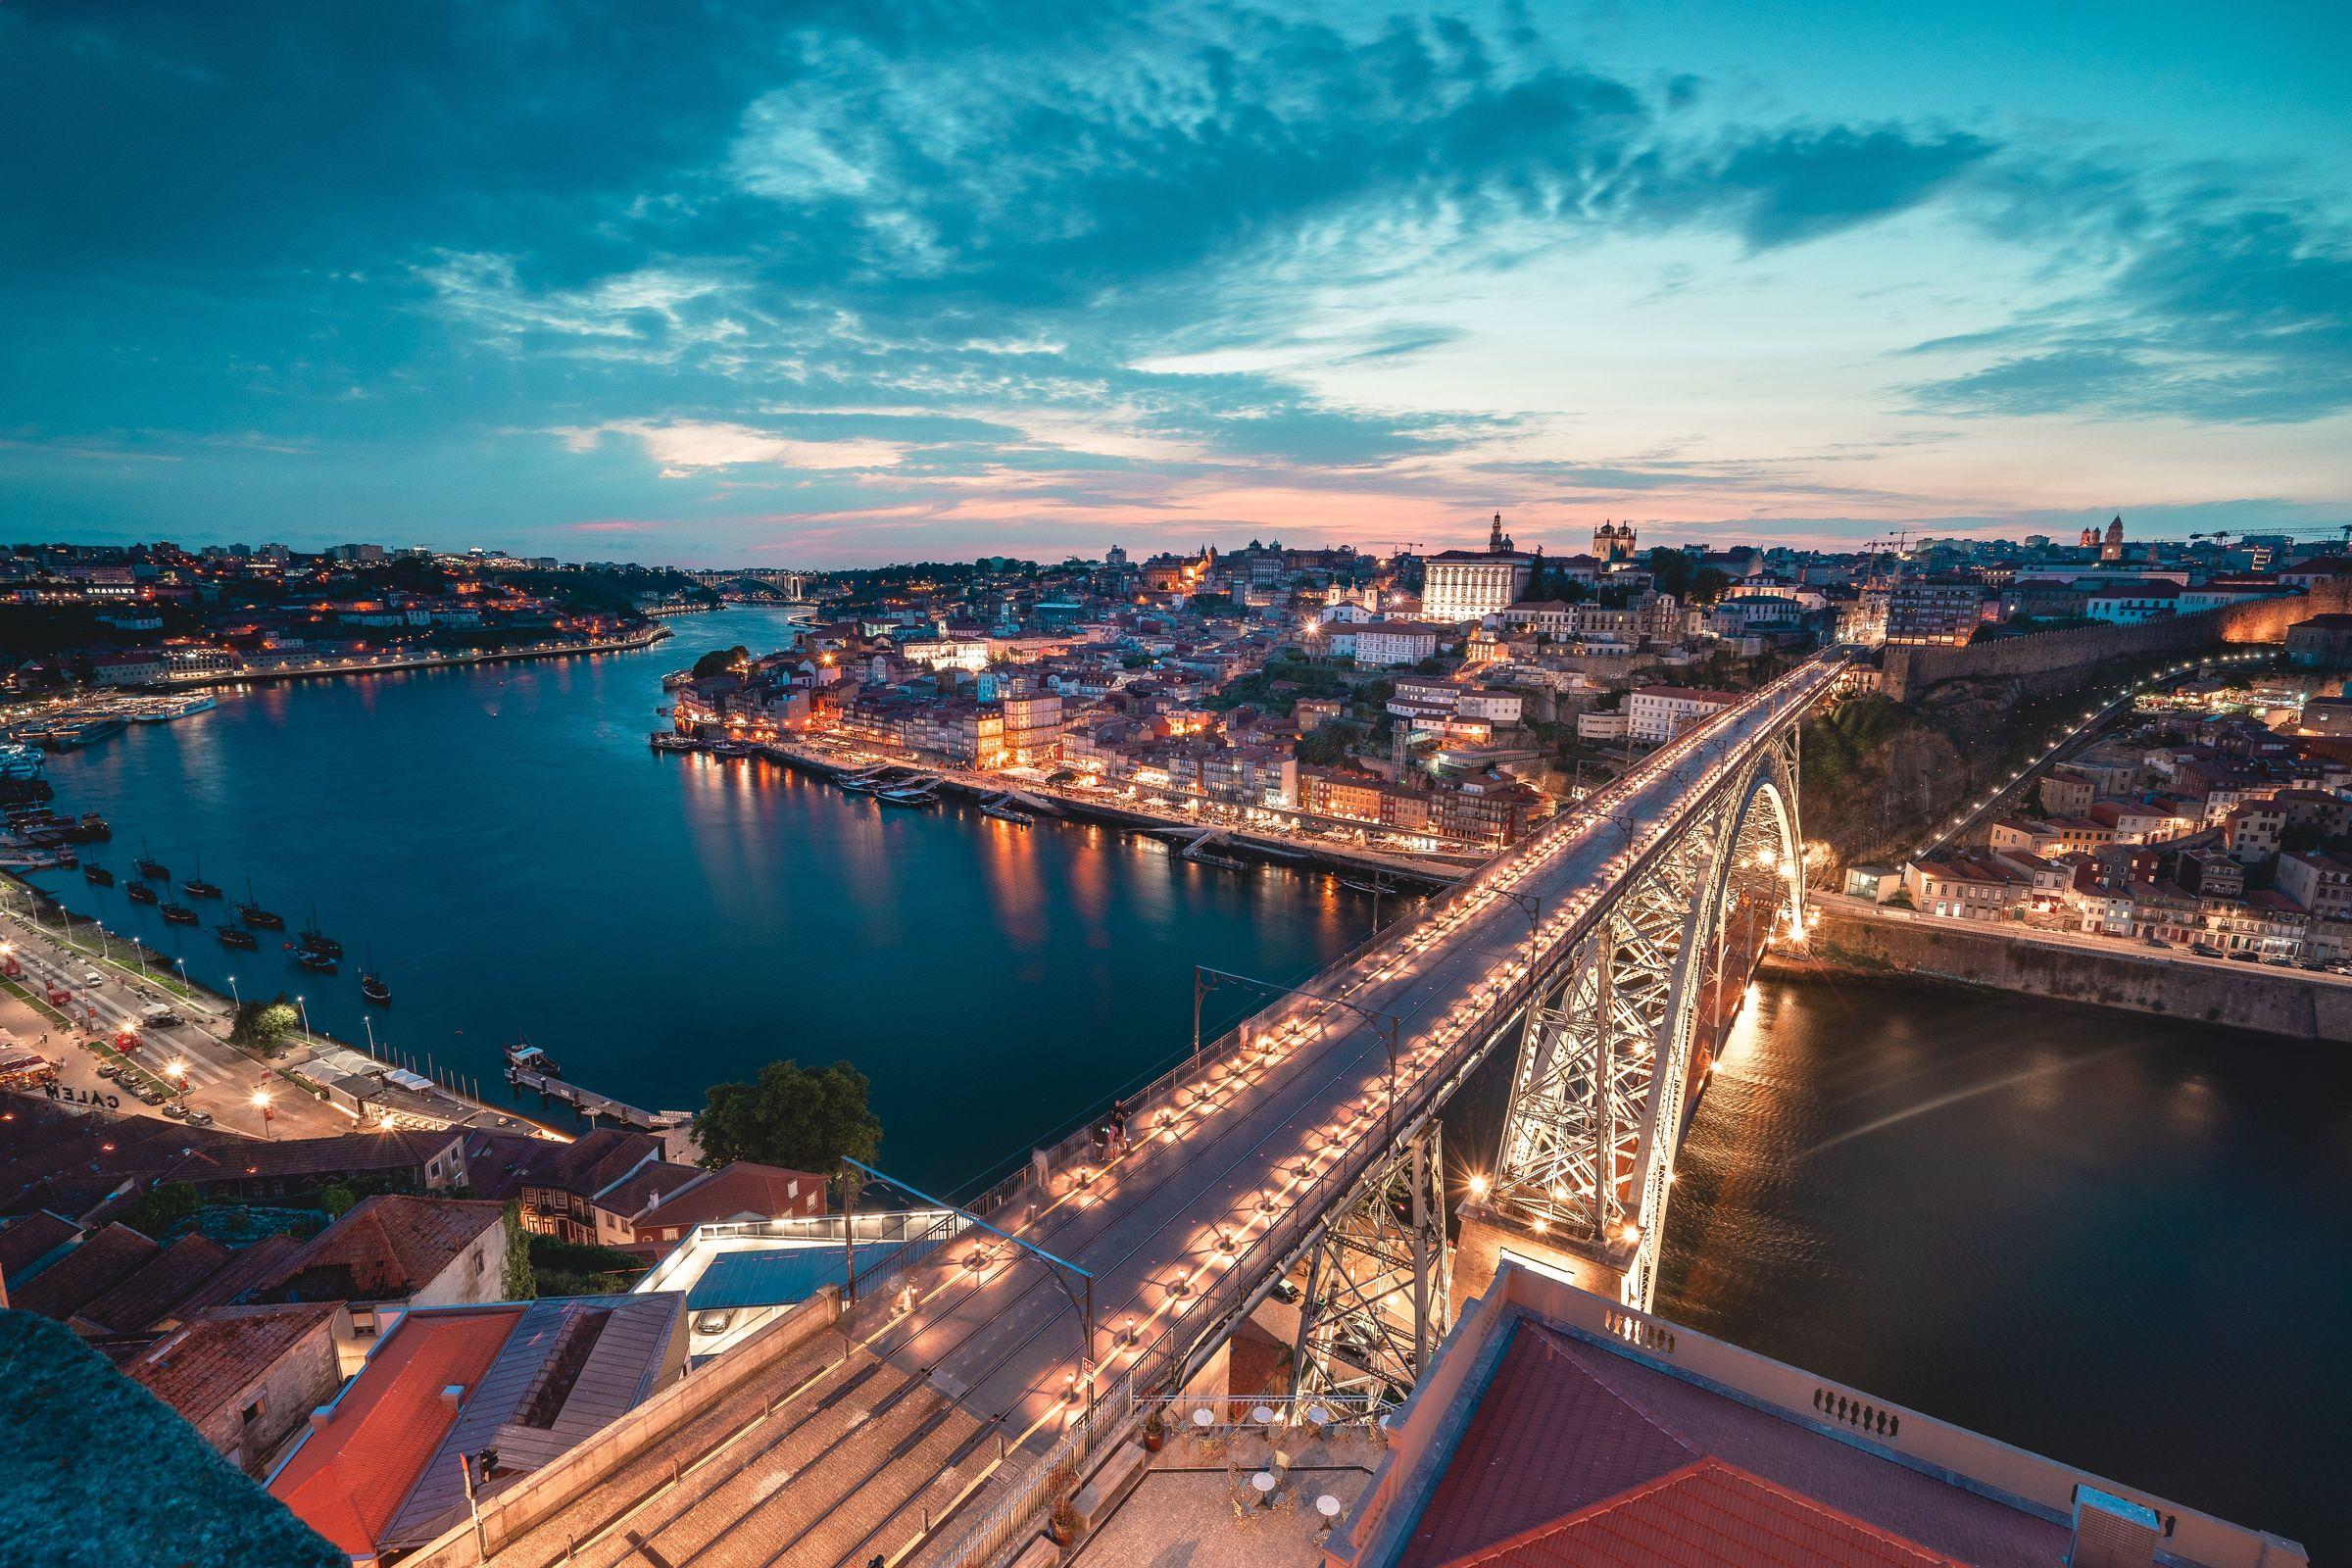 representative image of the city of Porto. Illuminated bridge, with the banks of the cities of Porto and Vila Nova de Gaia in the background, captured at night